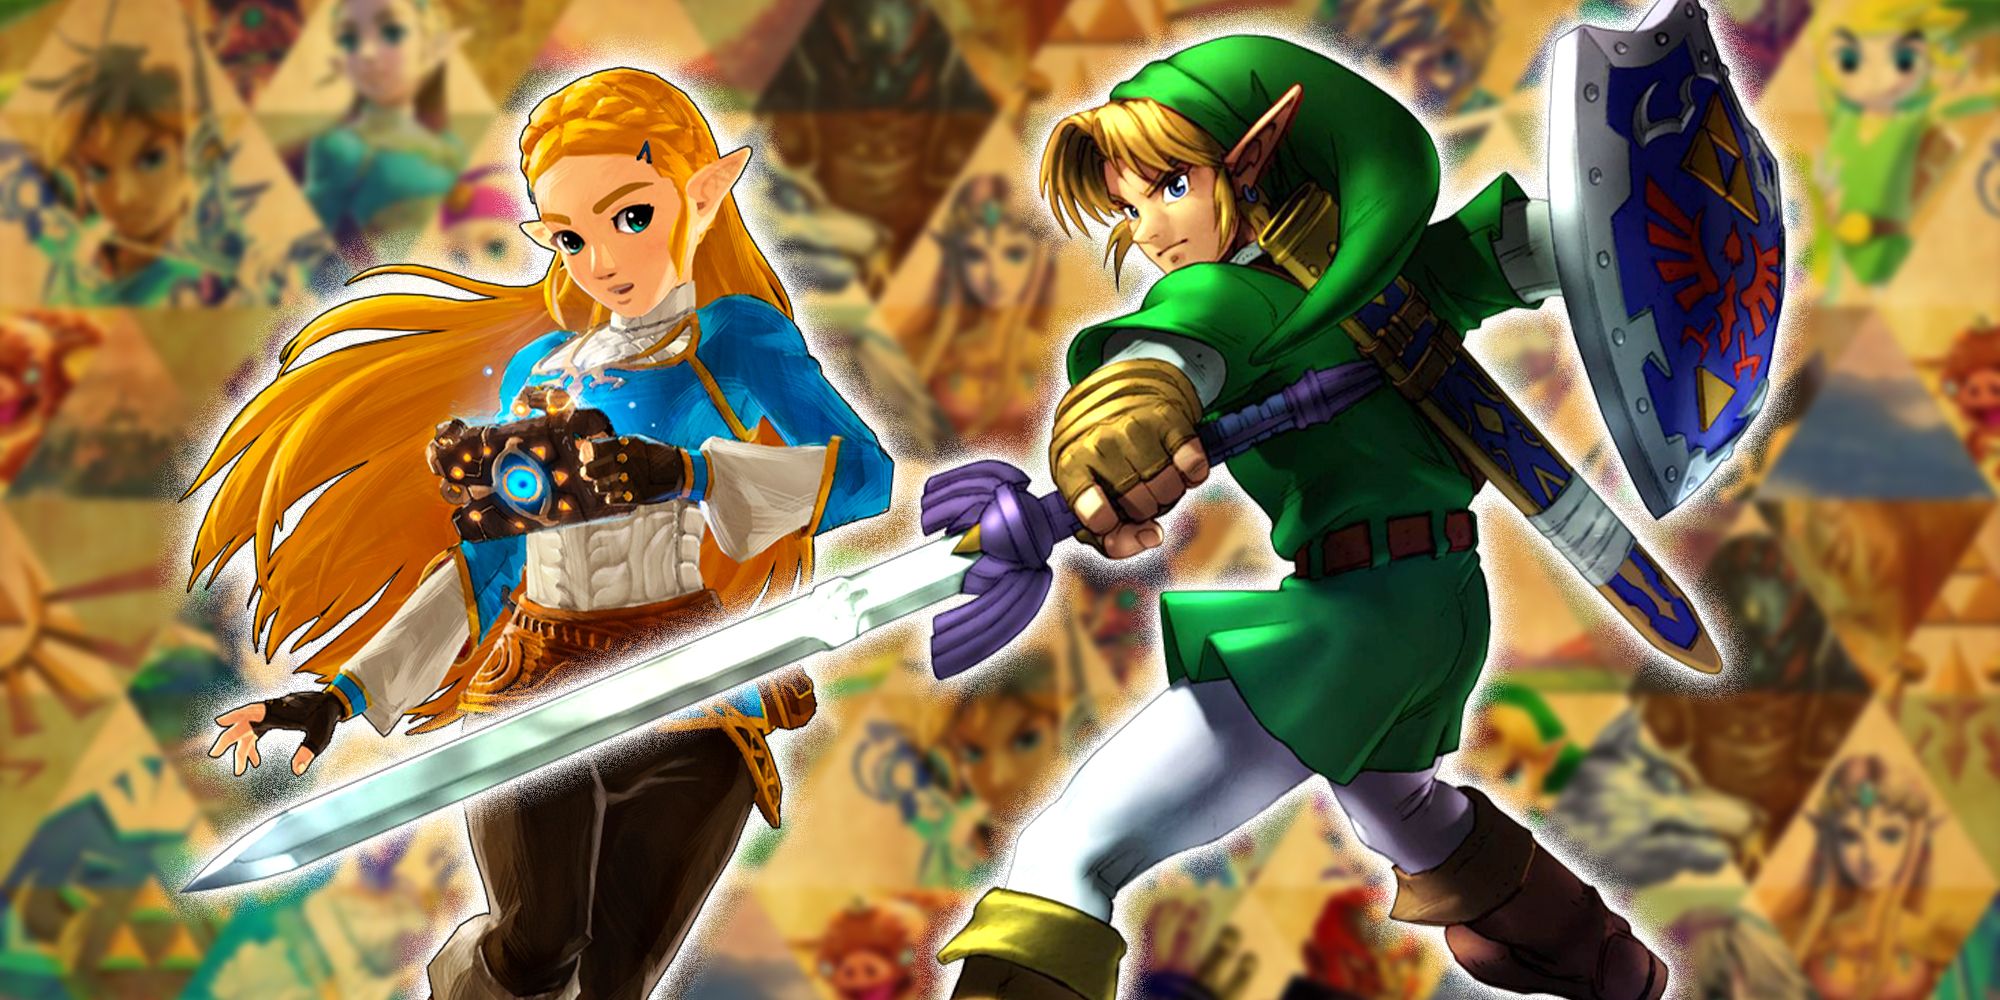 Zelda and Link in front of Legend of Zelda trifoce collage